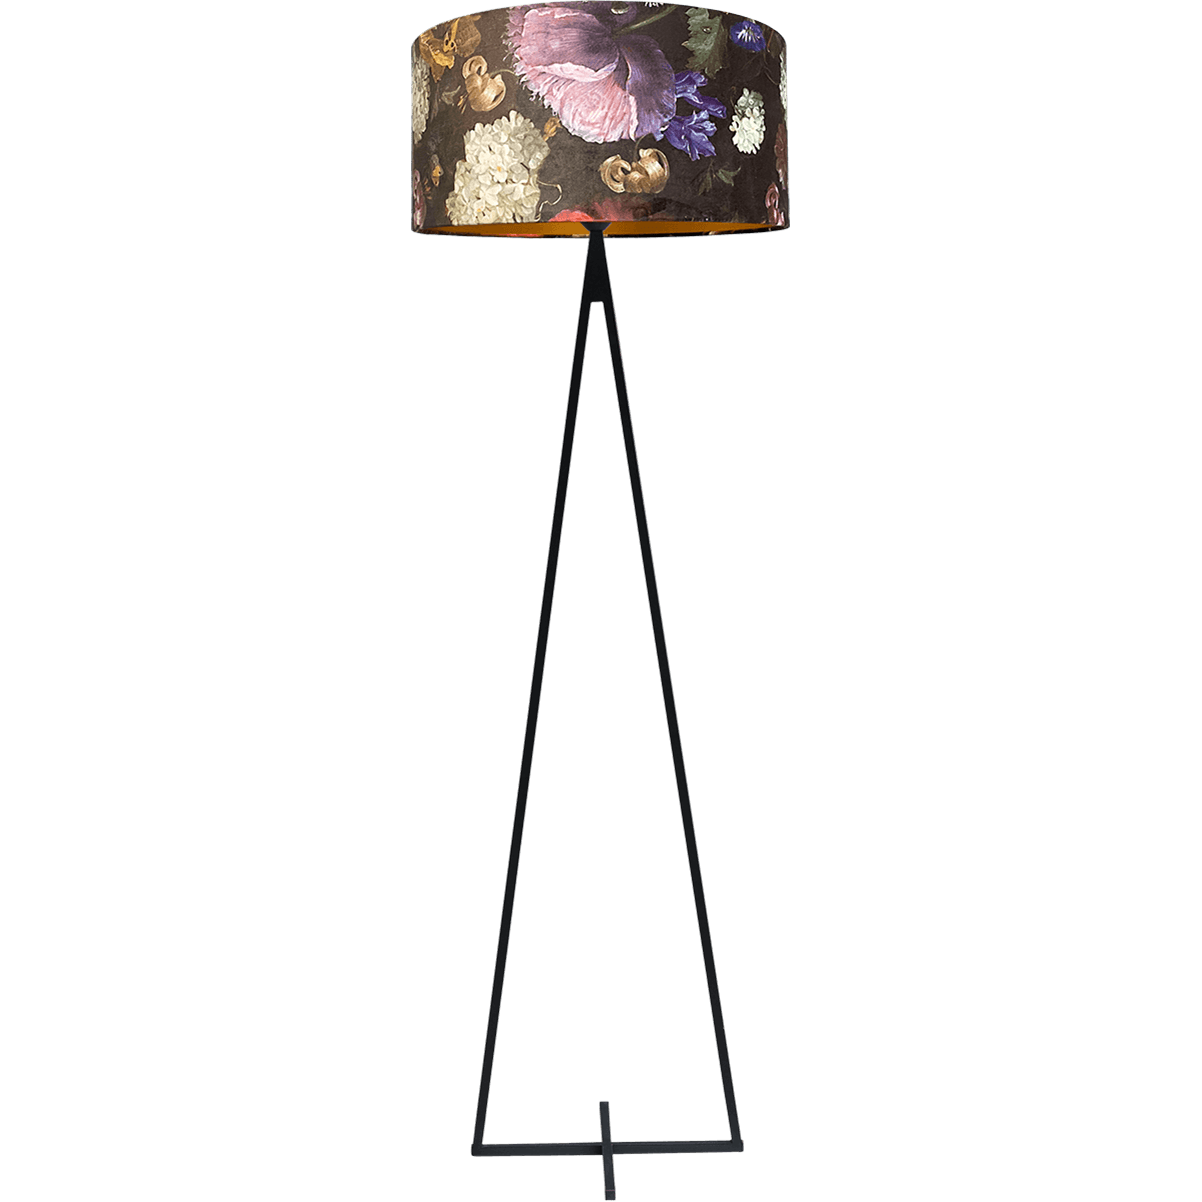 Vloerlamp Cross Triangle zwart structuur hoogte 158cm inclusief lampenkap met flowerenprint Artik flower 52/52/25 - MASTERLIGHT